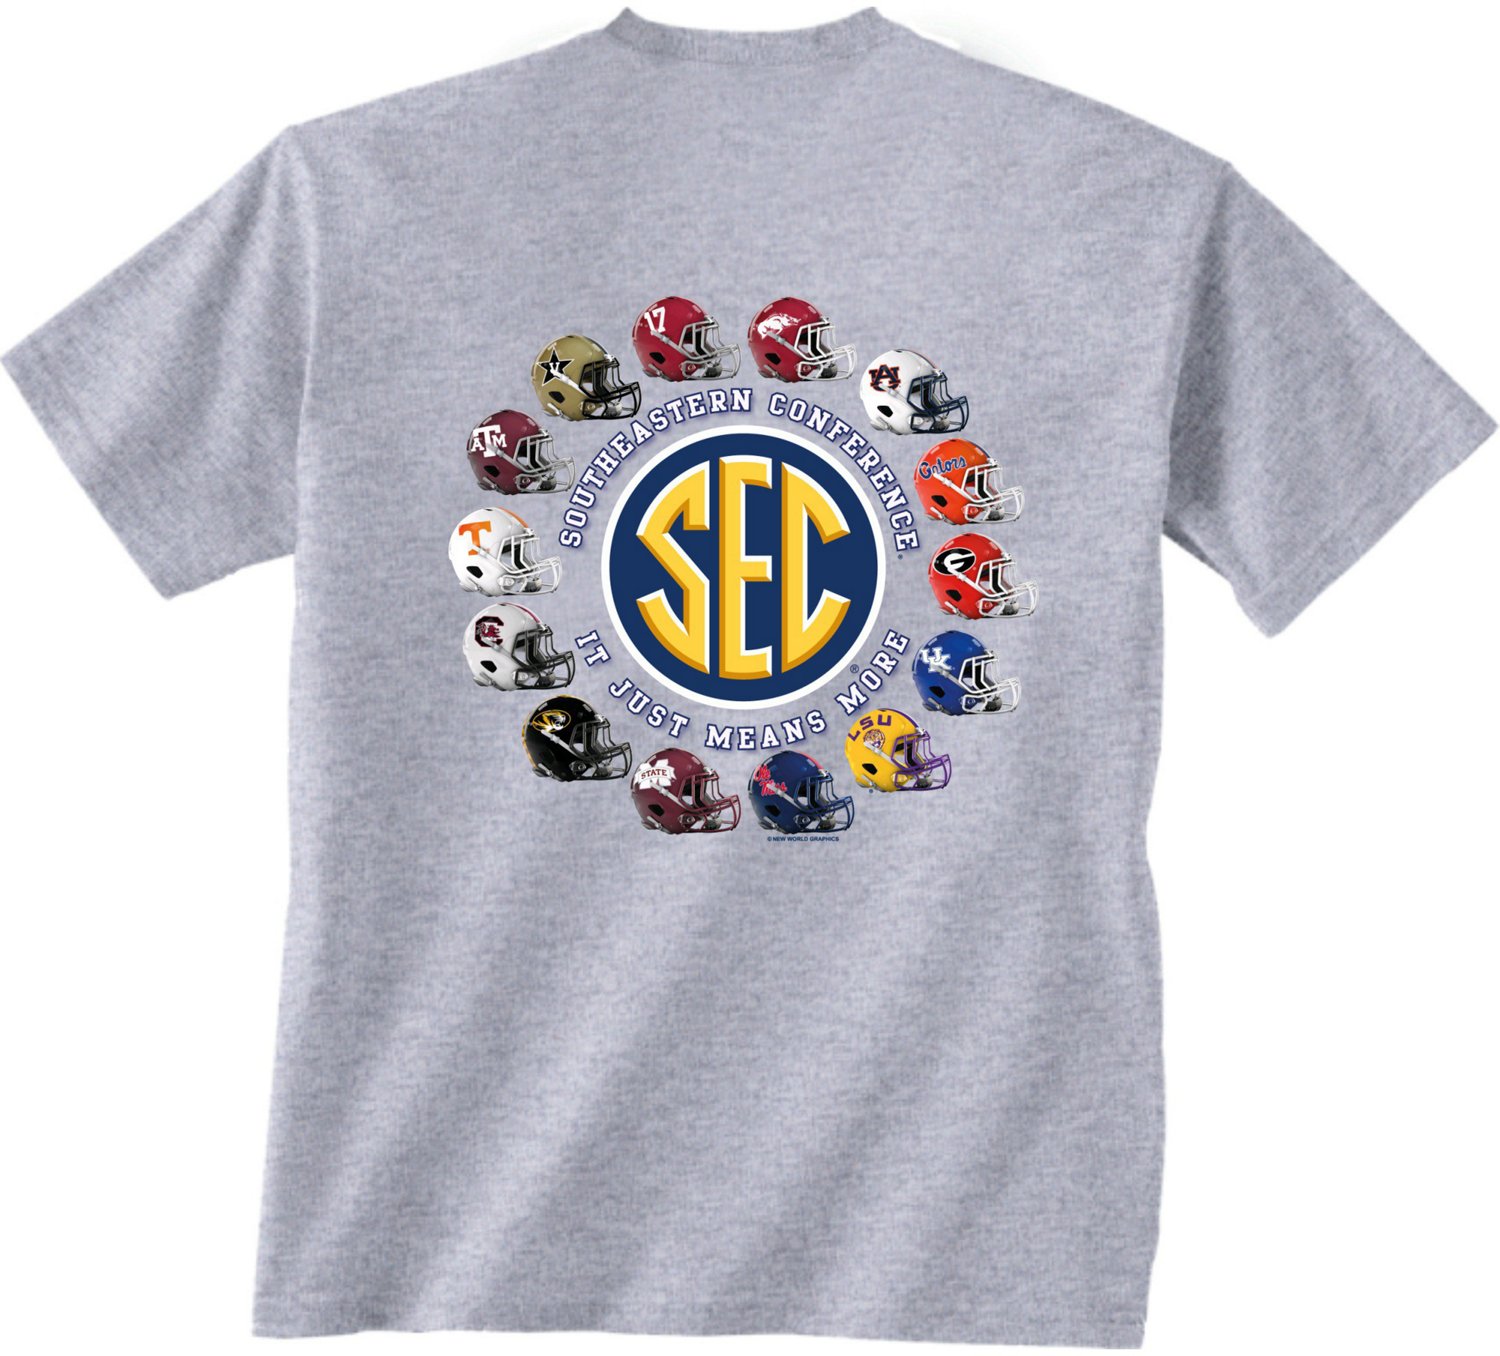 New World Graphics Men's SEC Helmets Tshirt Academy